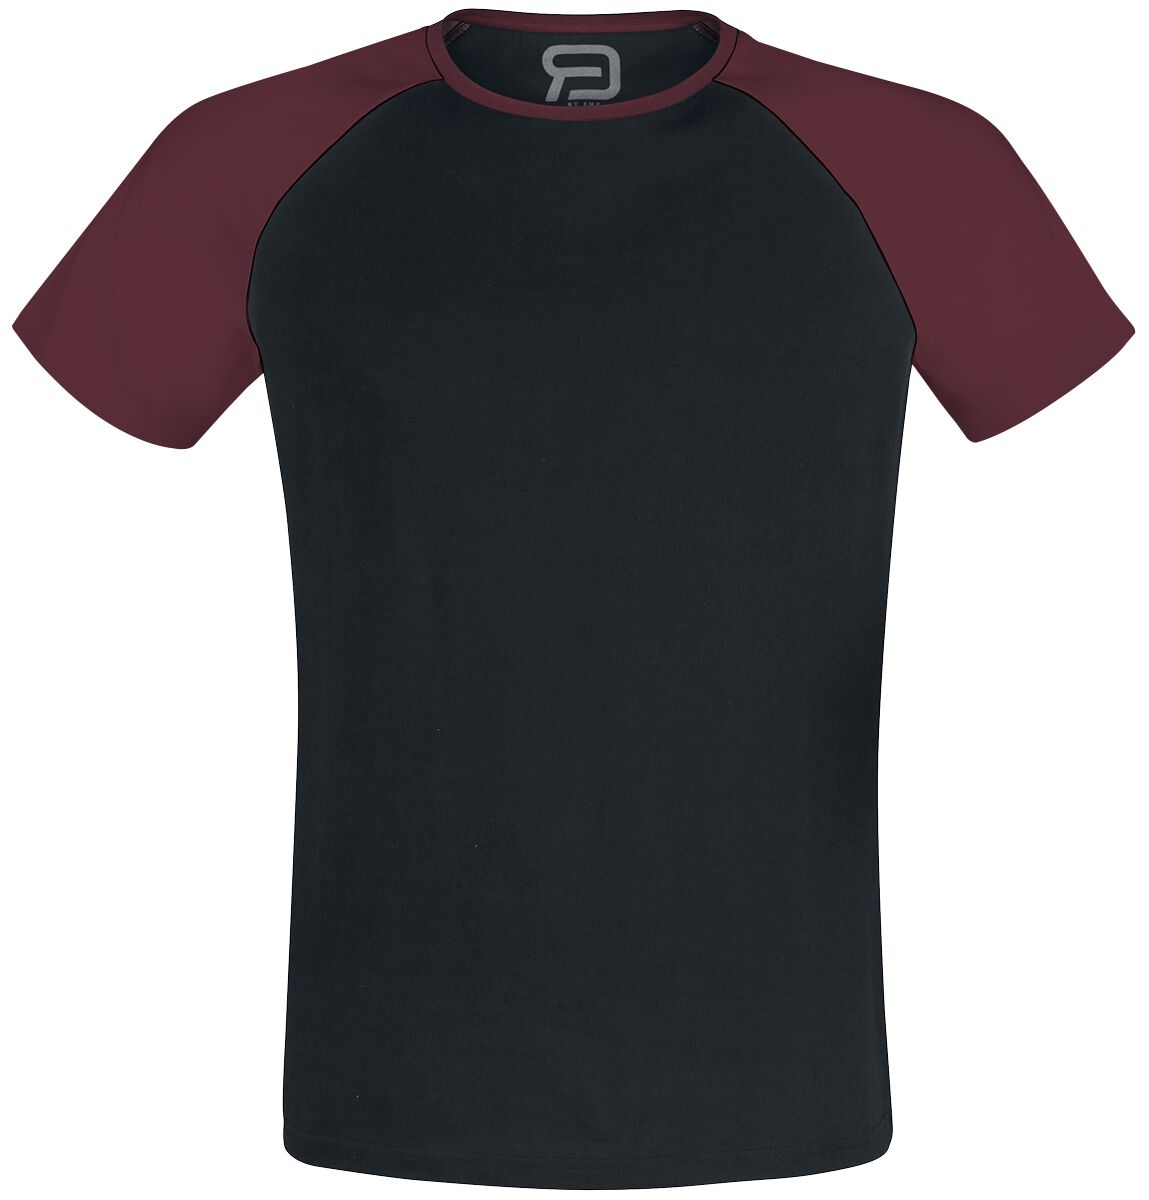 RED by EMP Short Raglan Road T-Shirt schwarz bordeaux in XL